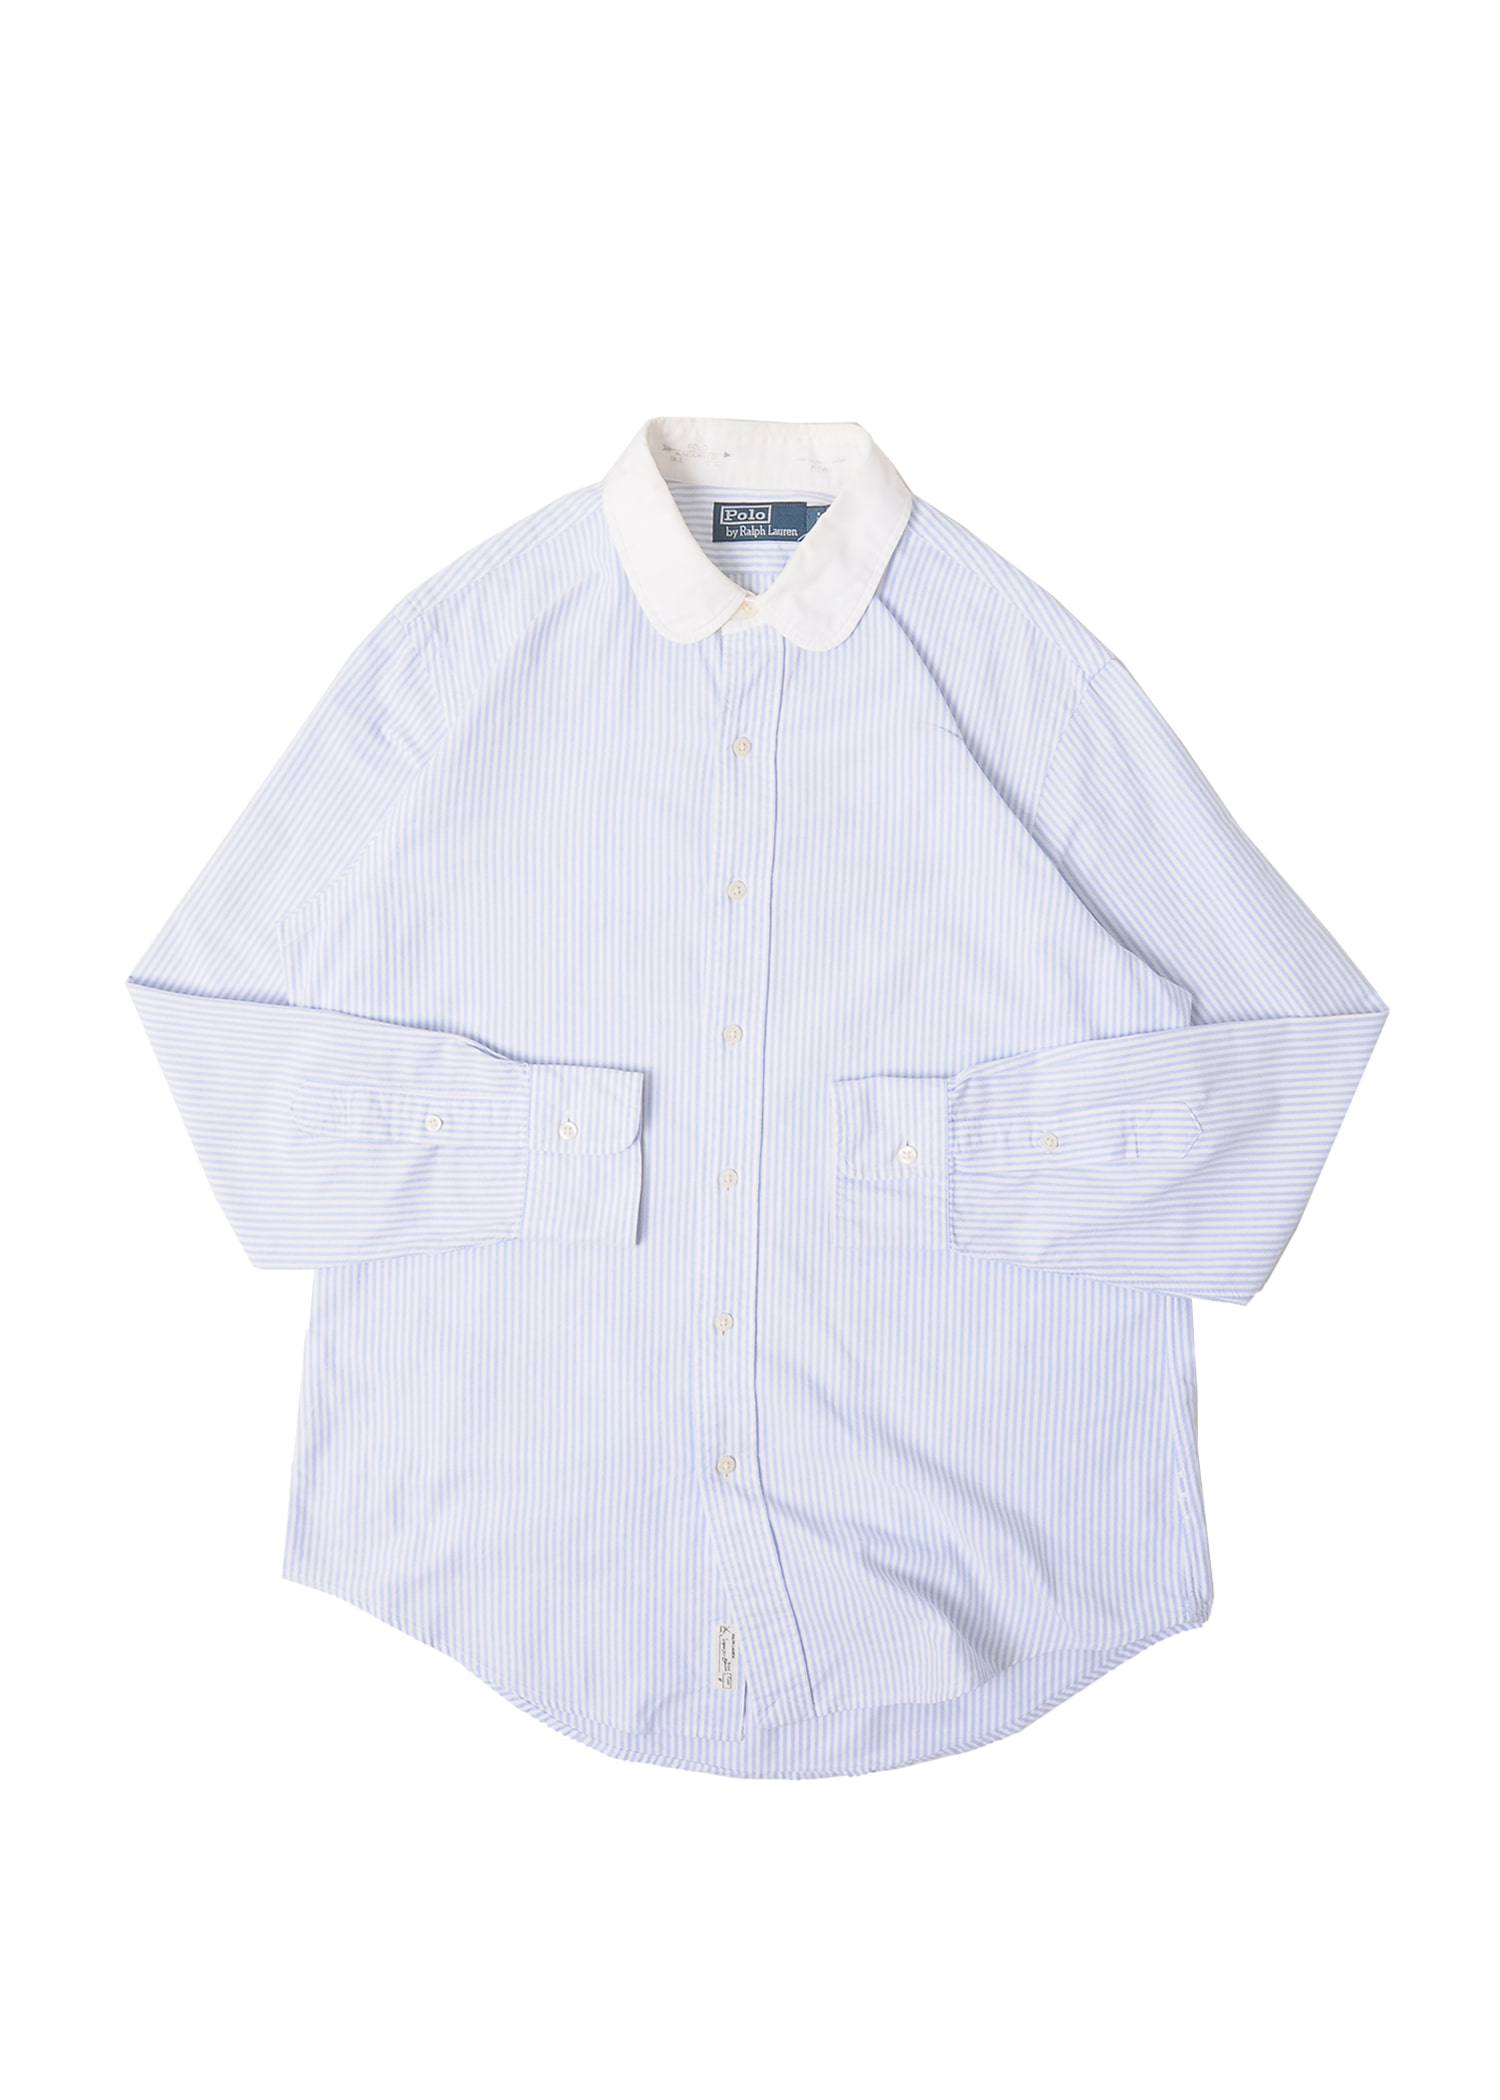 Polo by Ralph Lauren cleric shirt